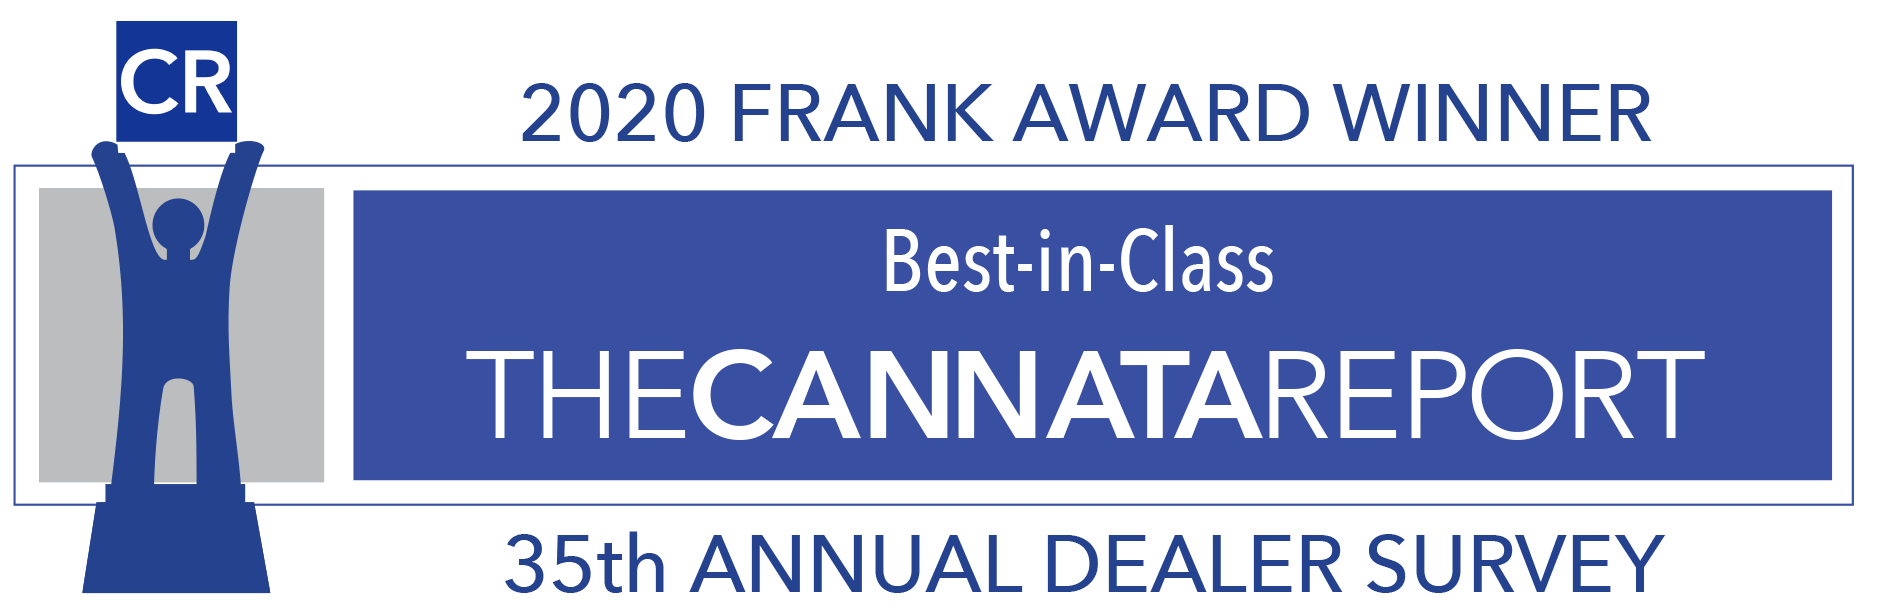 THE CANNATA REPORT 2020 FRANK AWARD